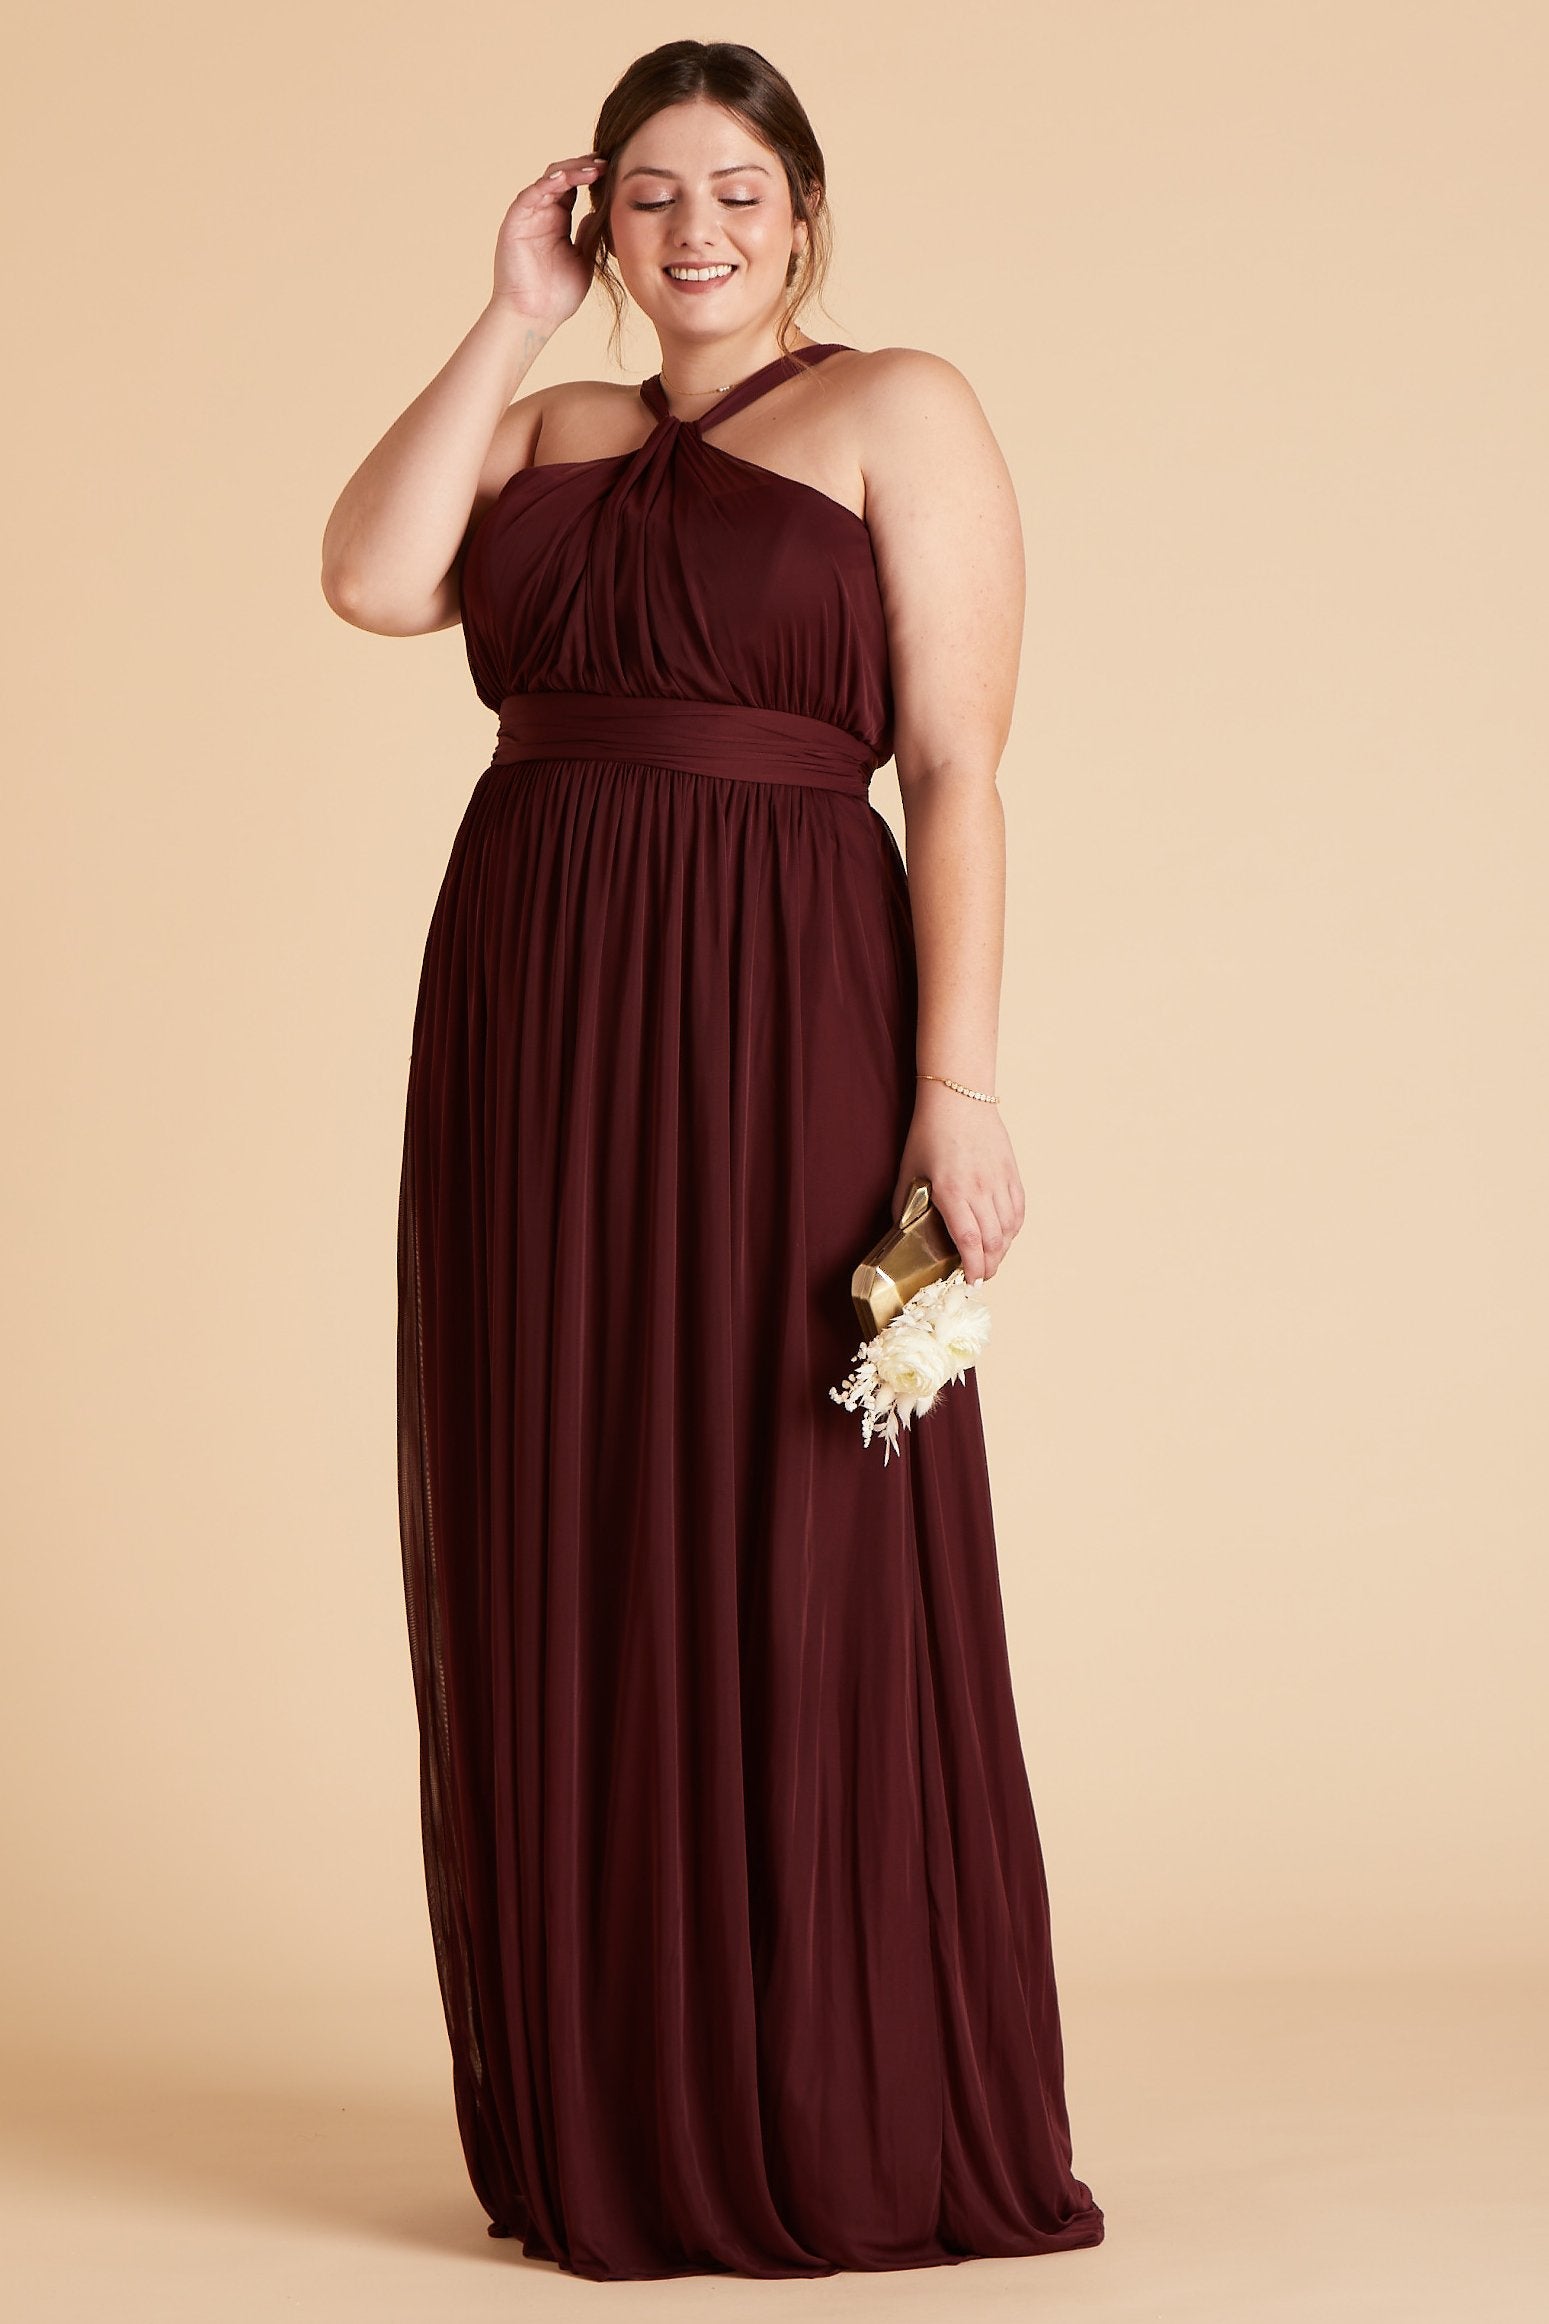 Kiko plus size bridesmaid dress in cabernet burgundy chiffon by Birdy Grey, front view